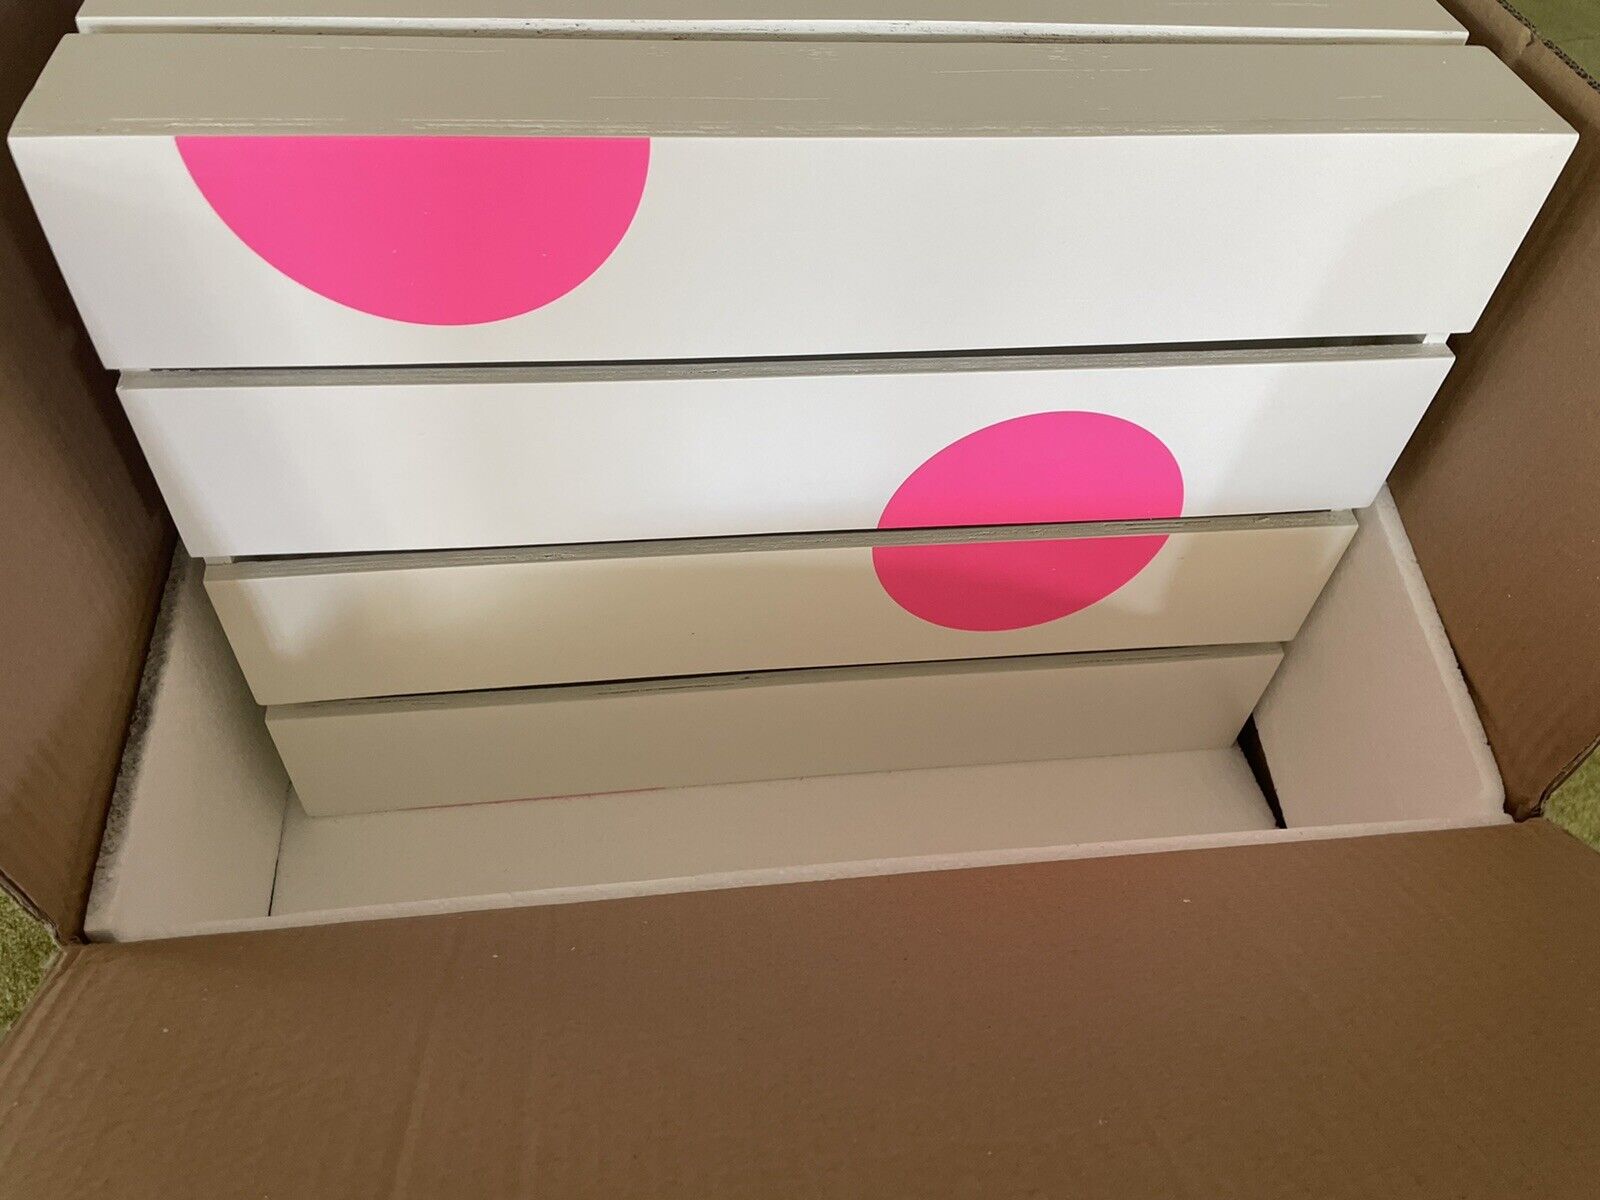 PINK Victoria’s Secret Wooden Display Crate NEW In Original Box RARE